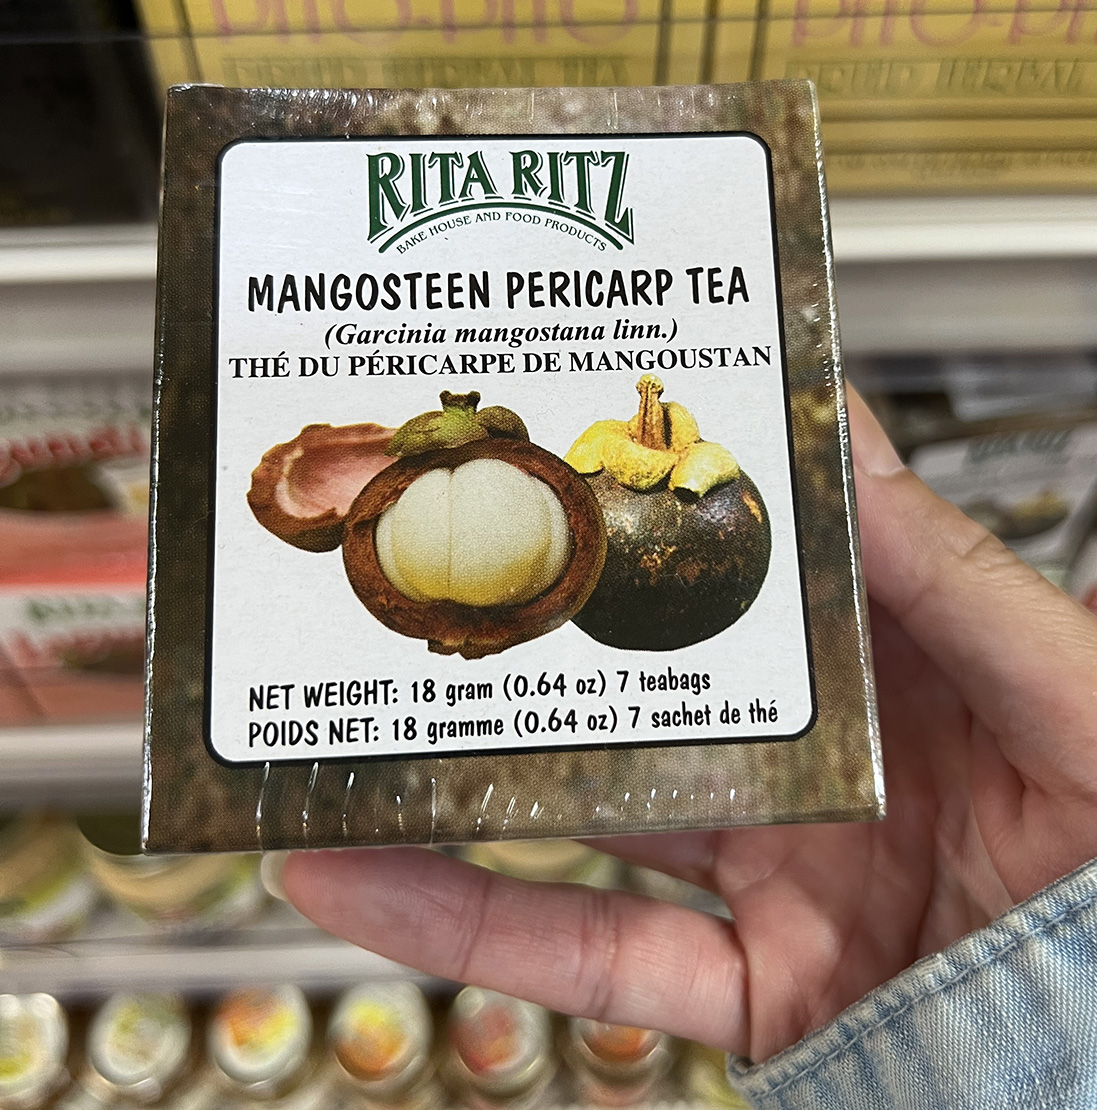 Mangosteen pericarp tea - Seafood City Supermarket in Irvine, California - Photo by Julie Nguyen